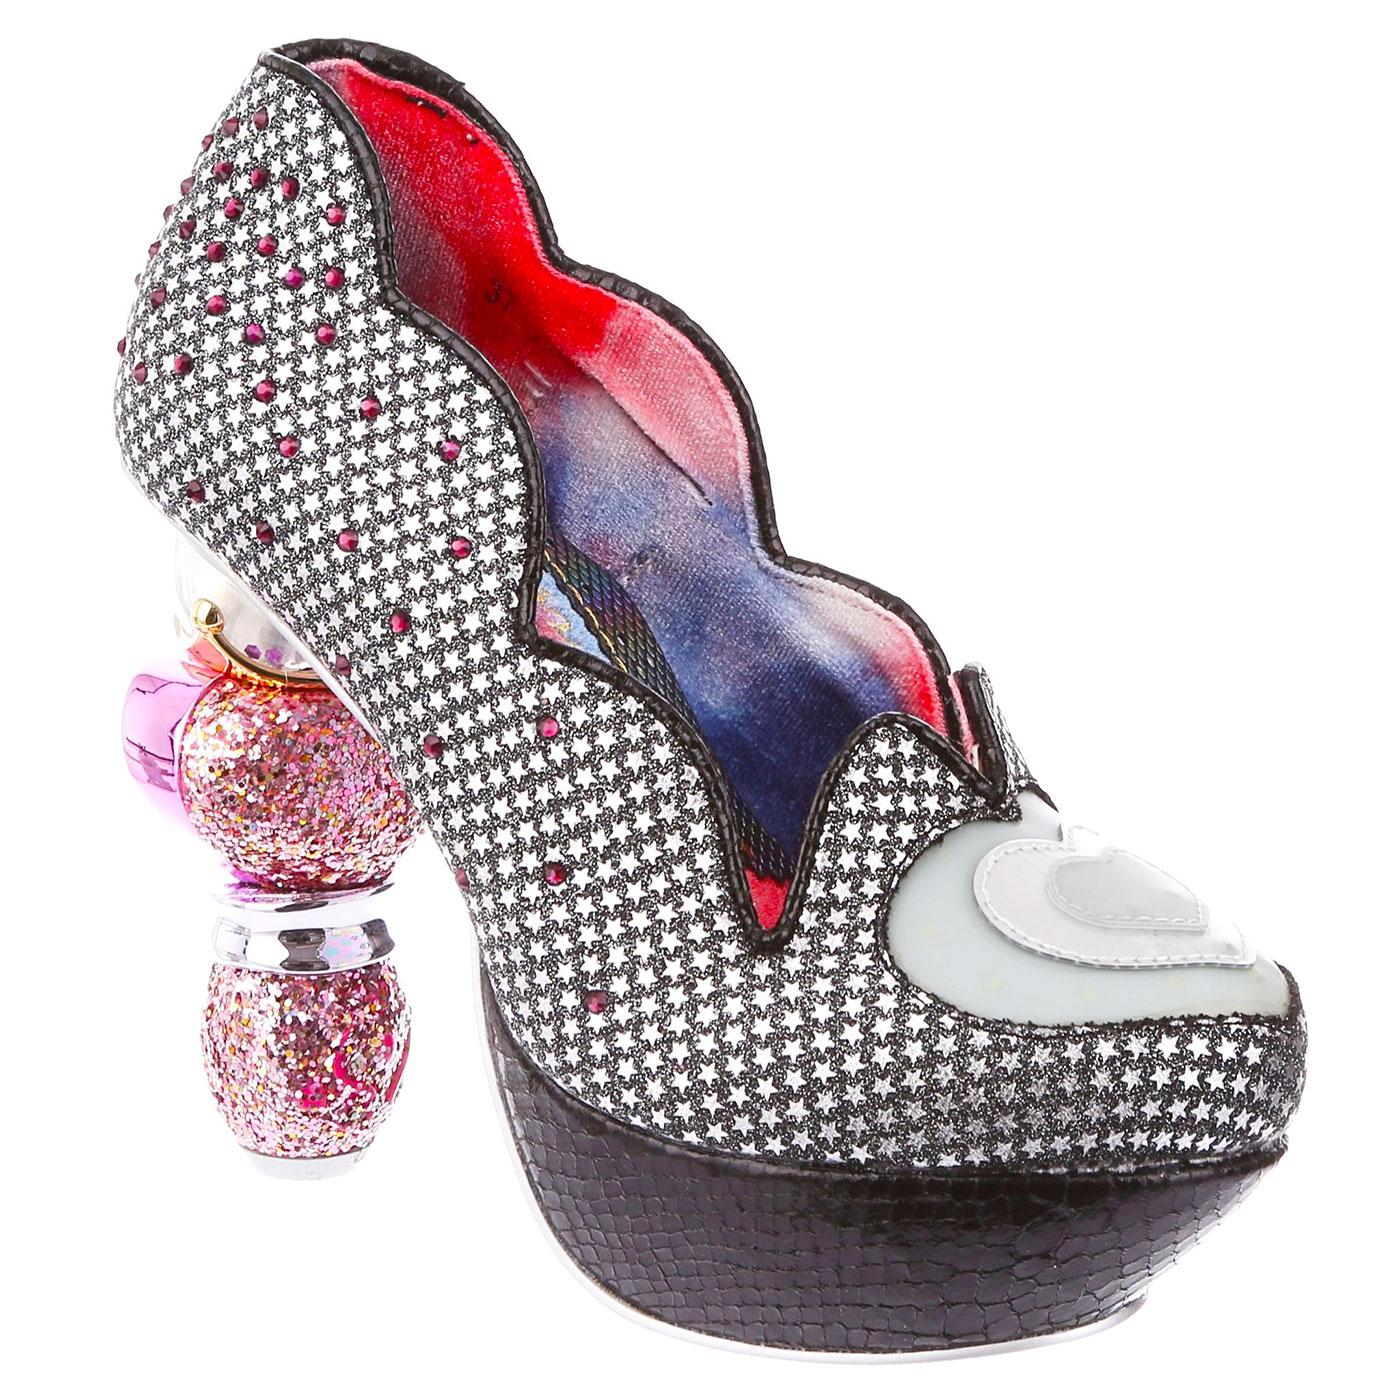 Charming Heart IRREGULAR CHOICE Magic Wand Shoes B